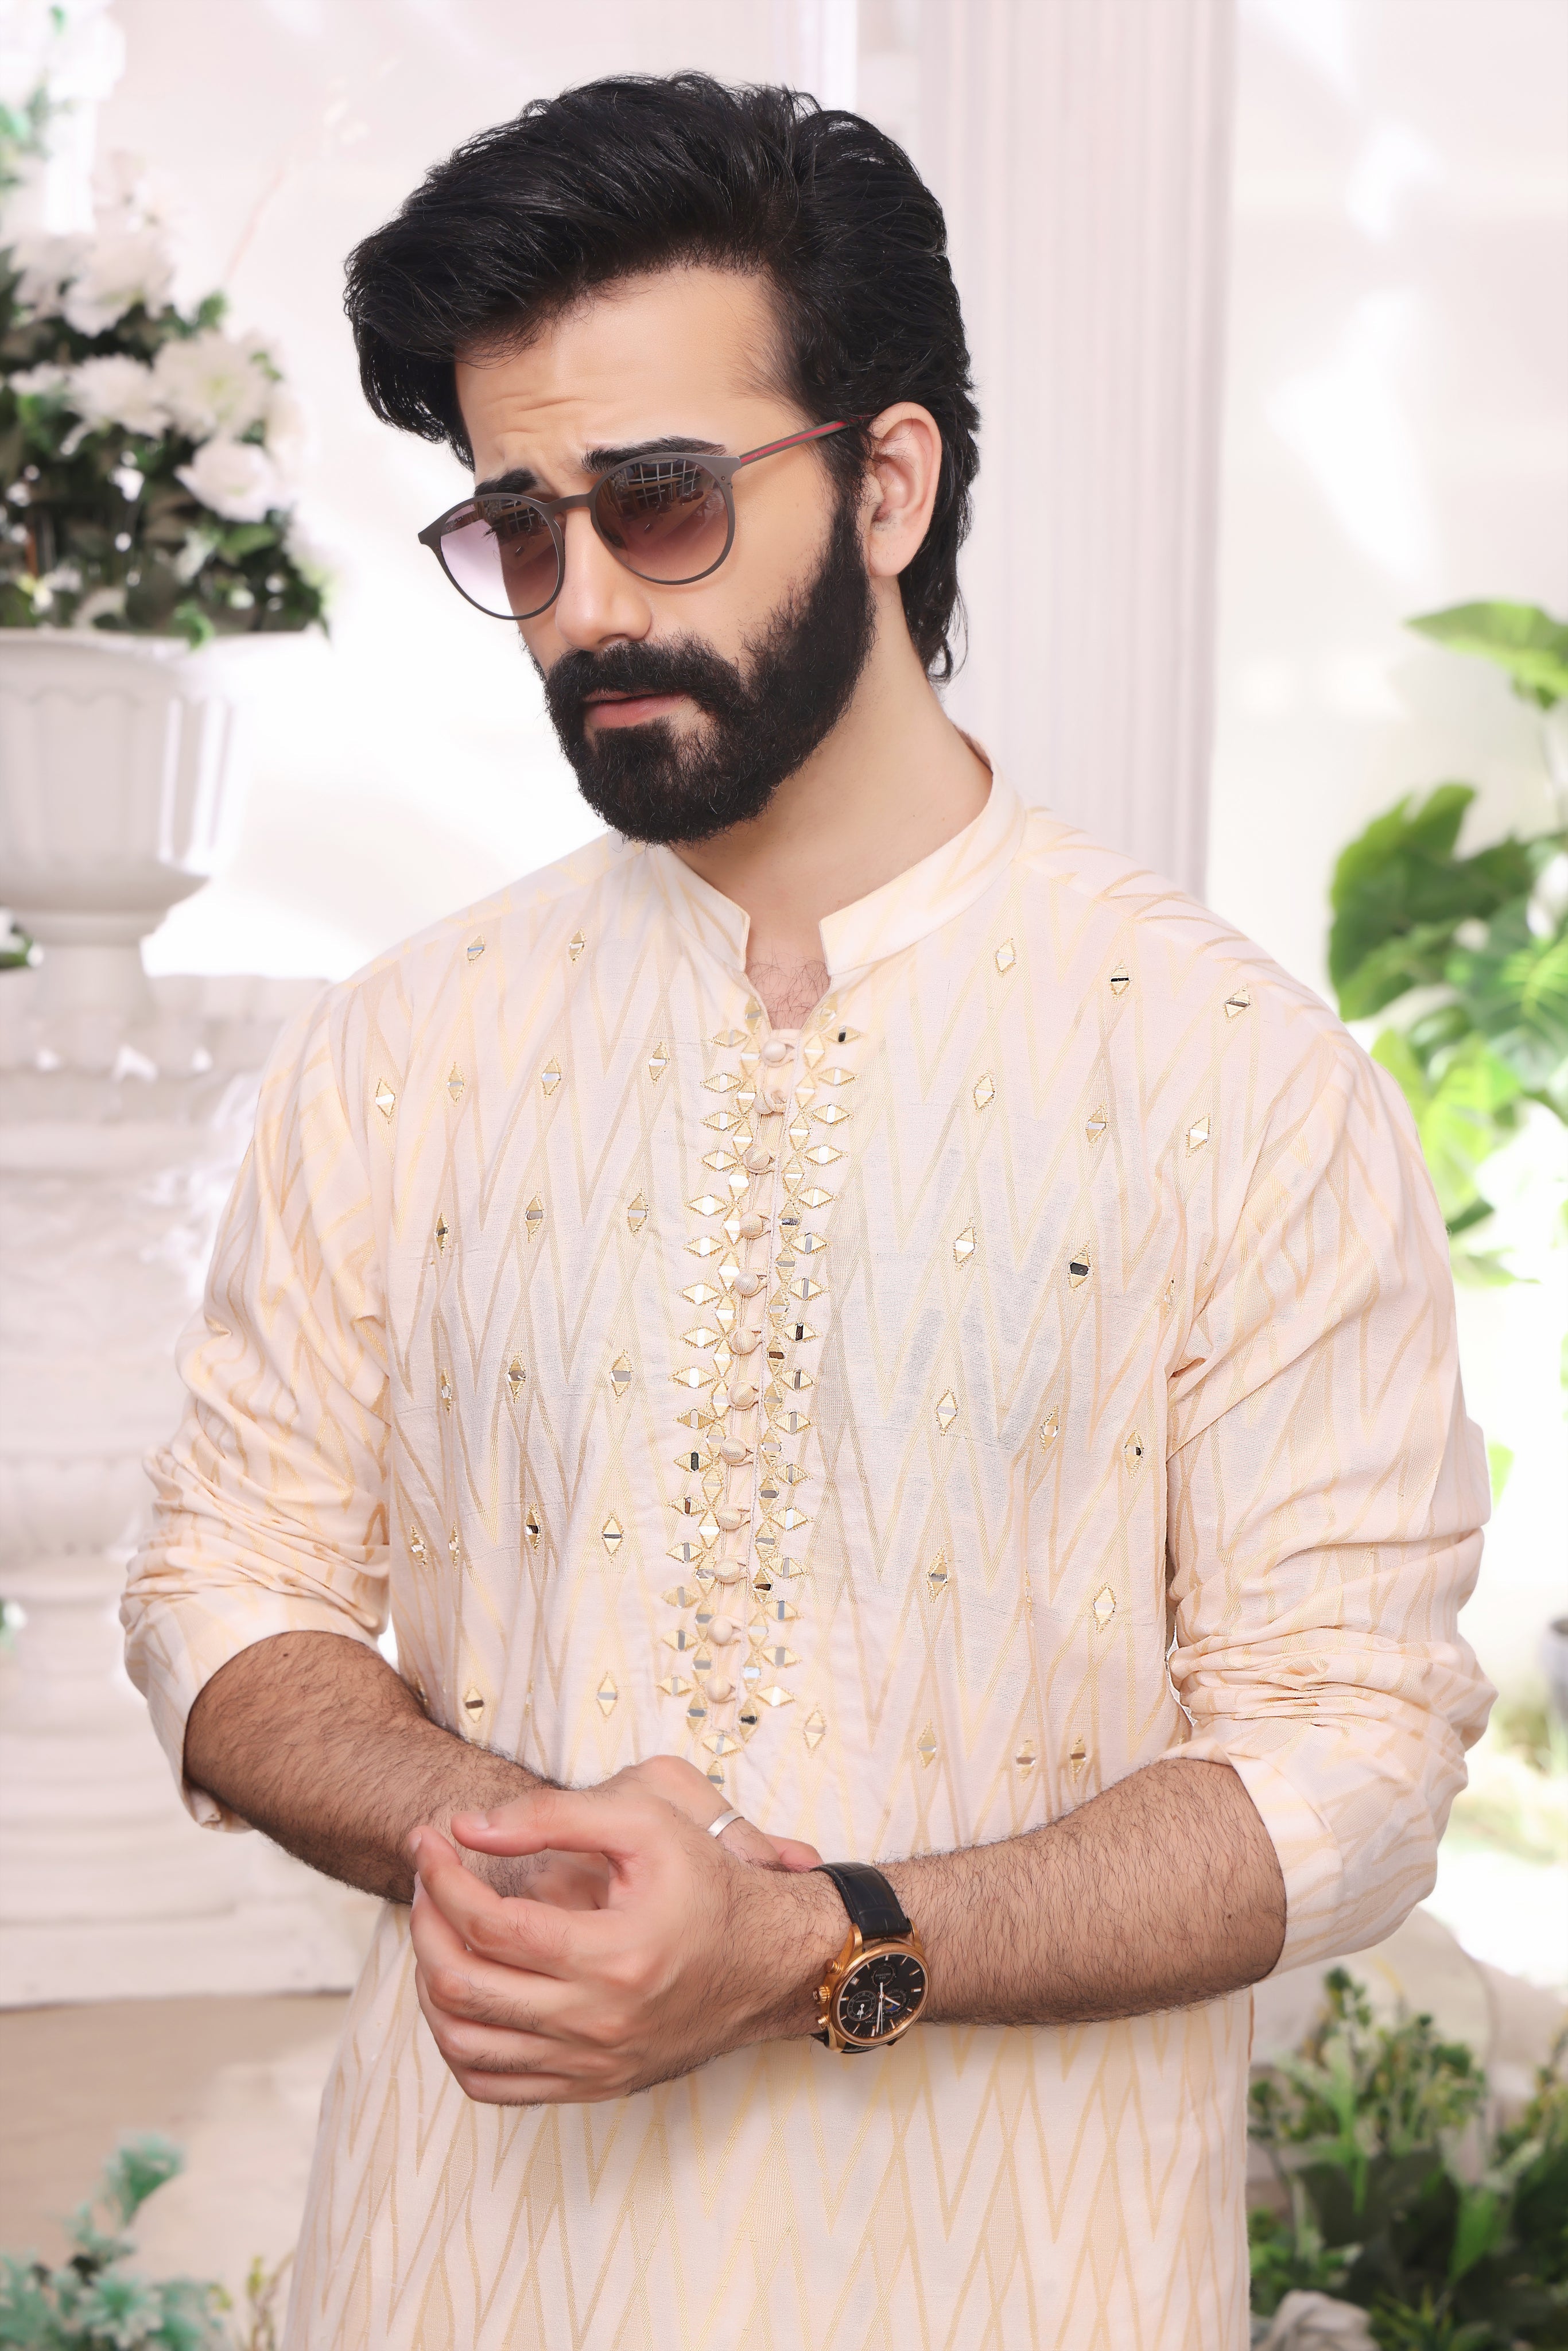 Golden & White Color Mirror Embroidered Self-Cotton Kurta Pajama For Men